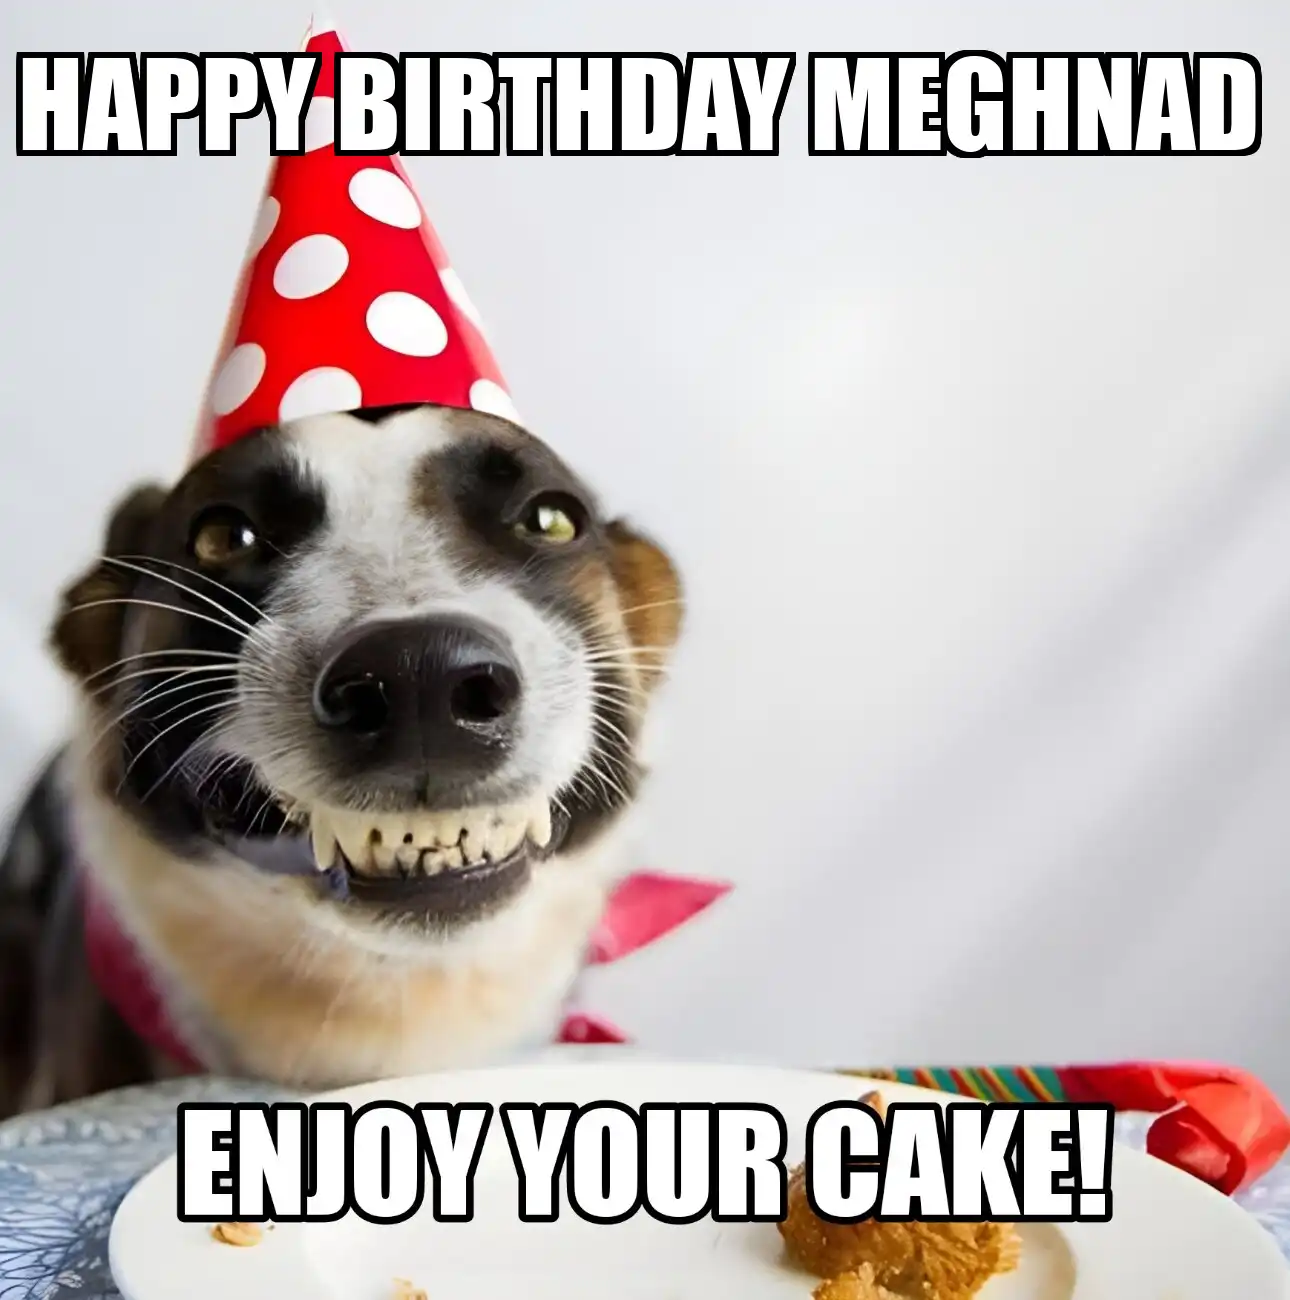 Happy Birthday Meghnad Enjoy Your Cake Dog Meme